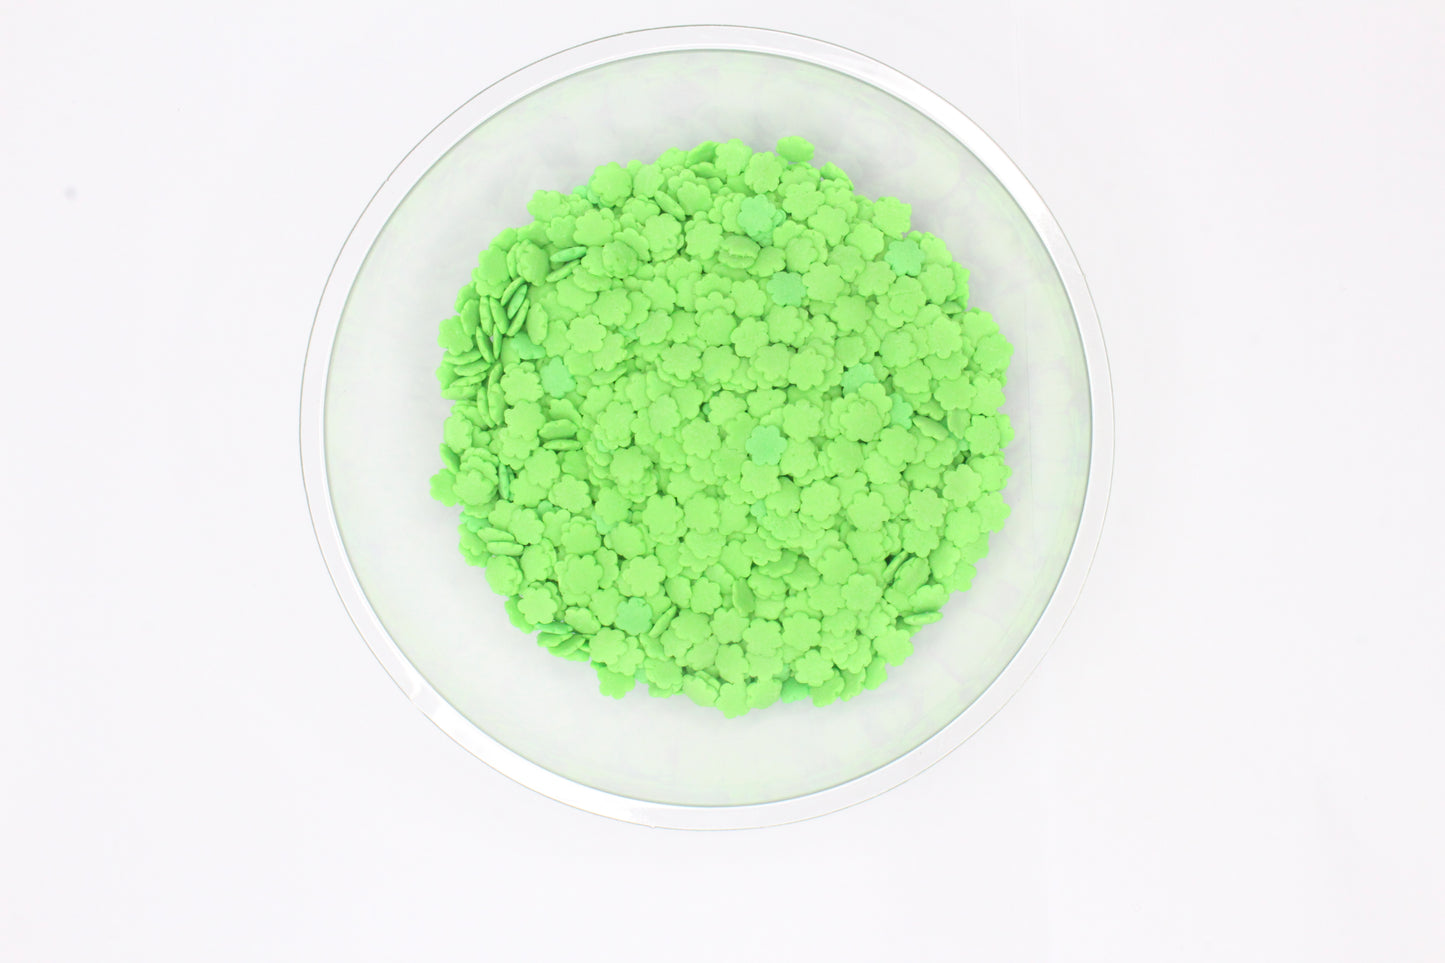 4mm Solid Green Flower Sprinkle Confetti